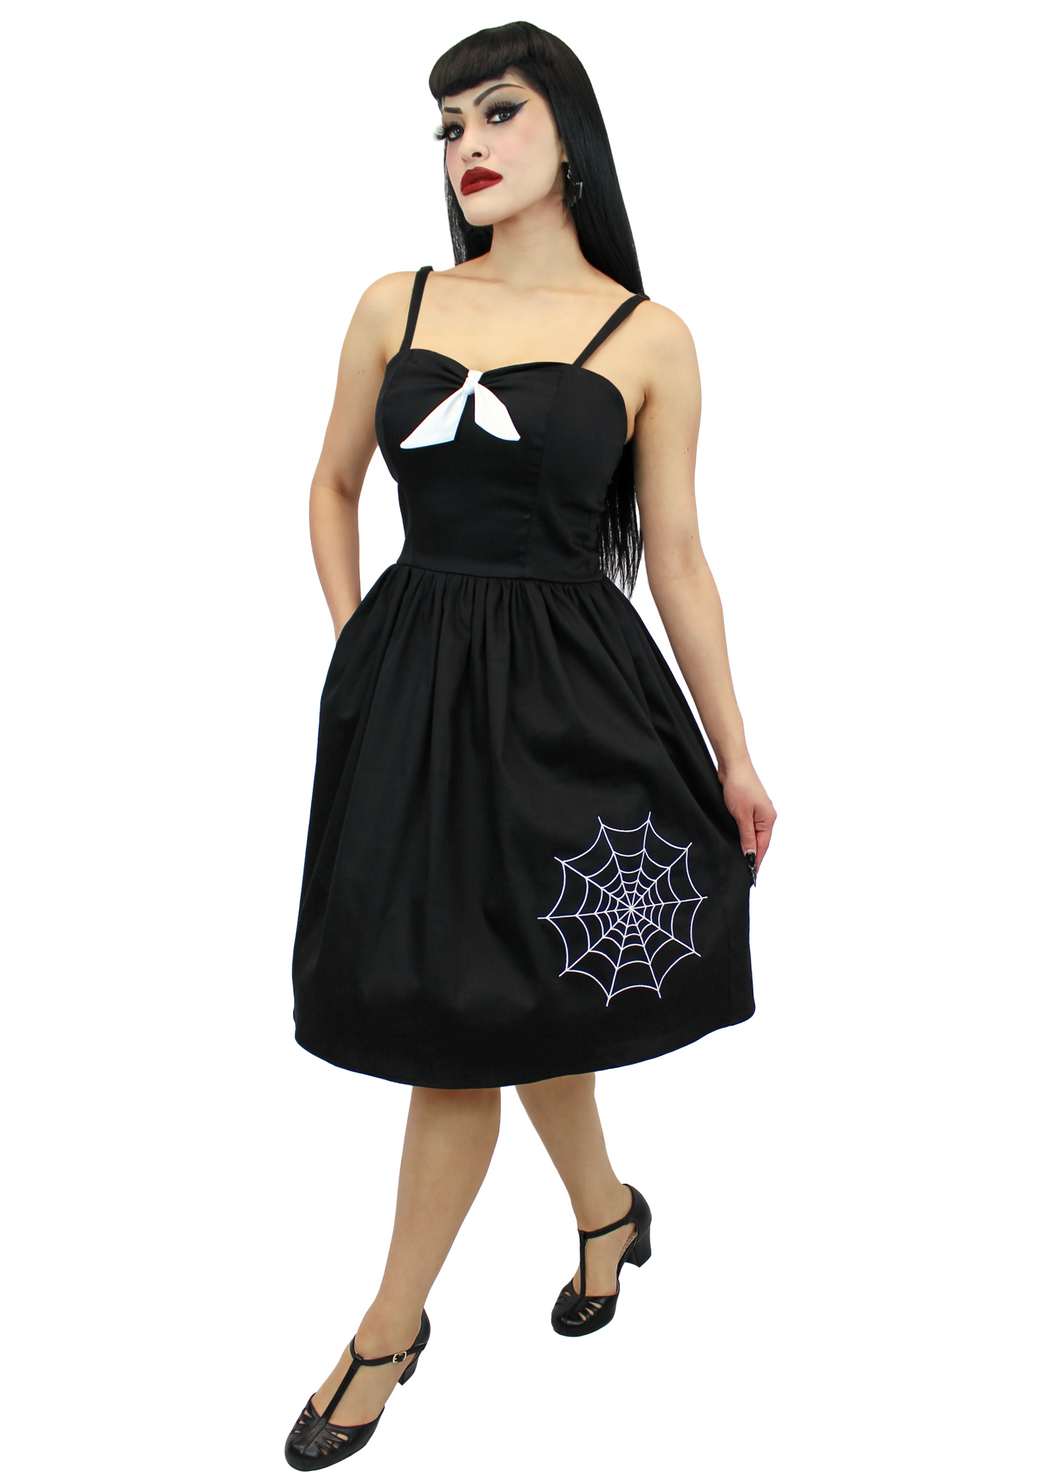 Summerween Black Dress